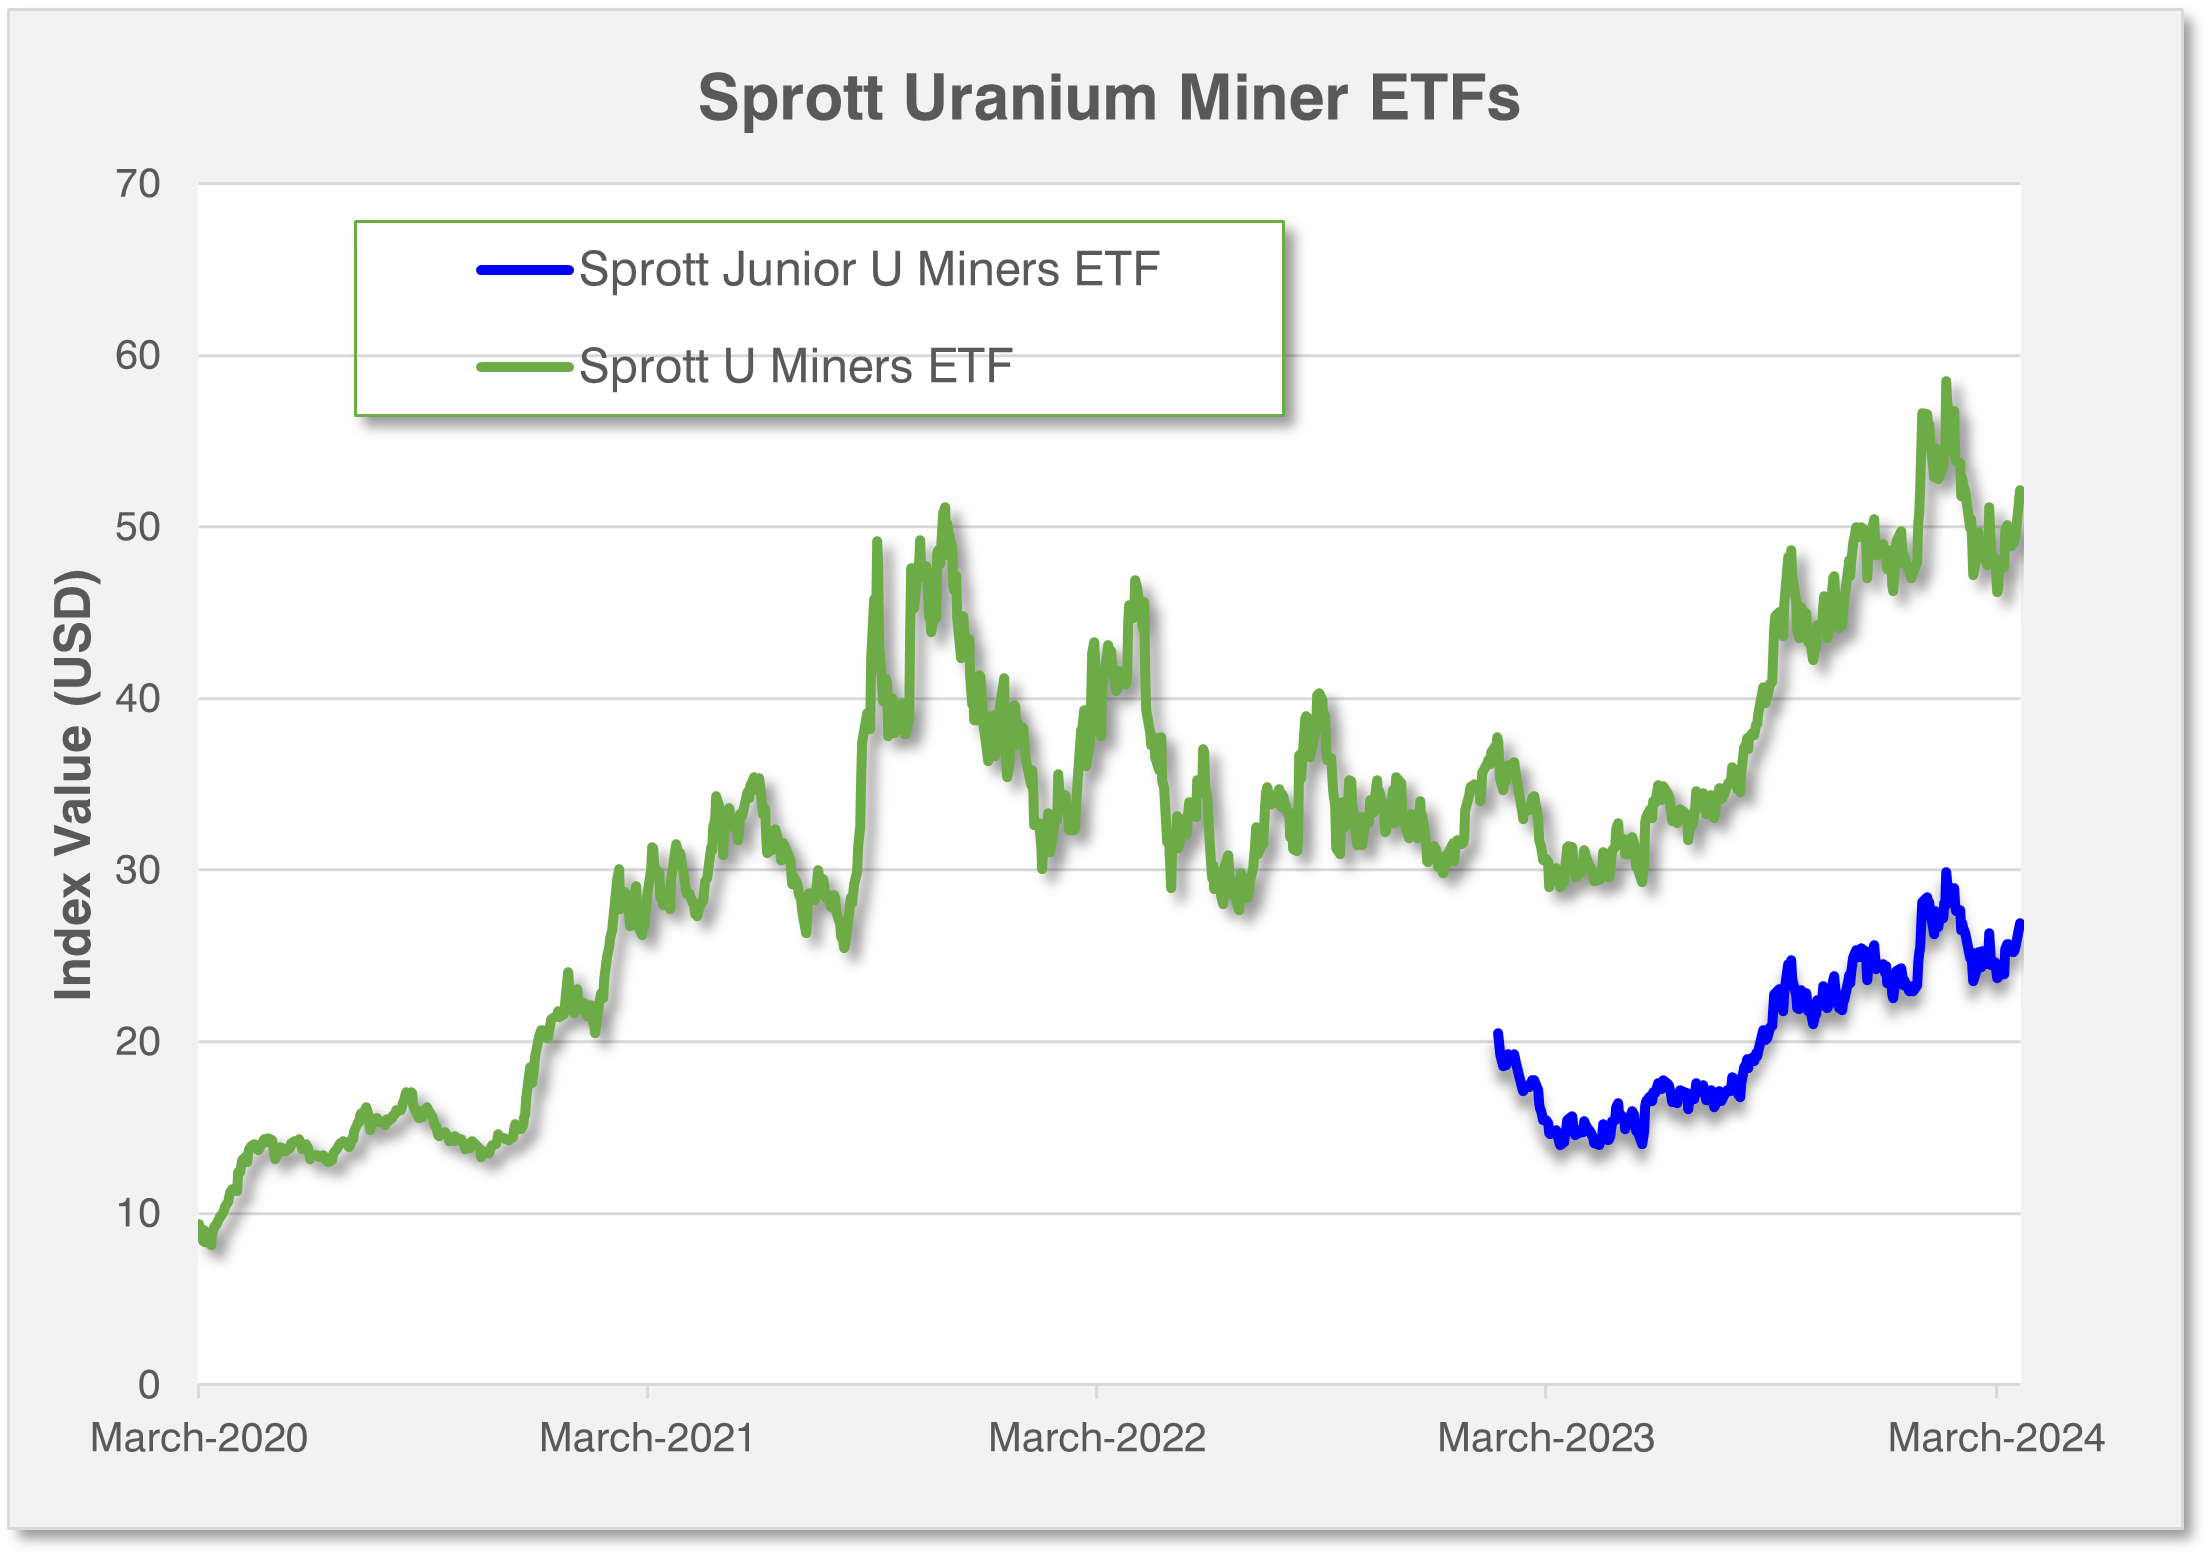 Sprott Uranium Miner ETFs Index Value - March 2020 - March 2024